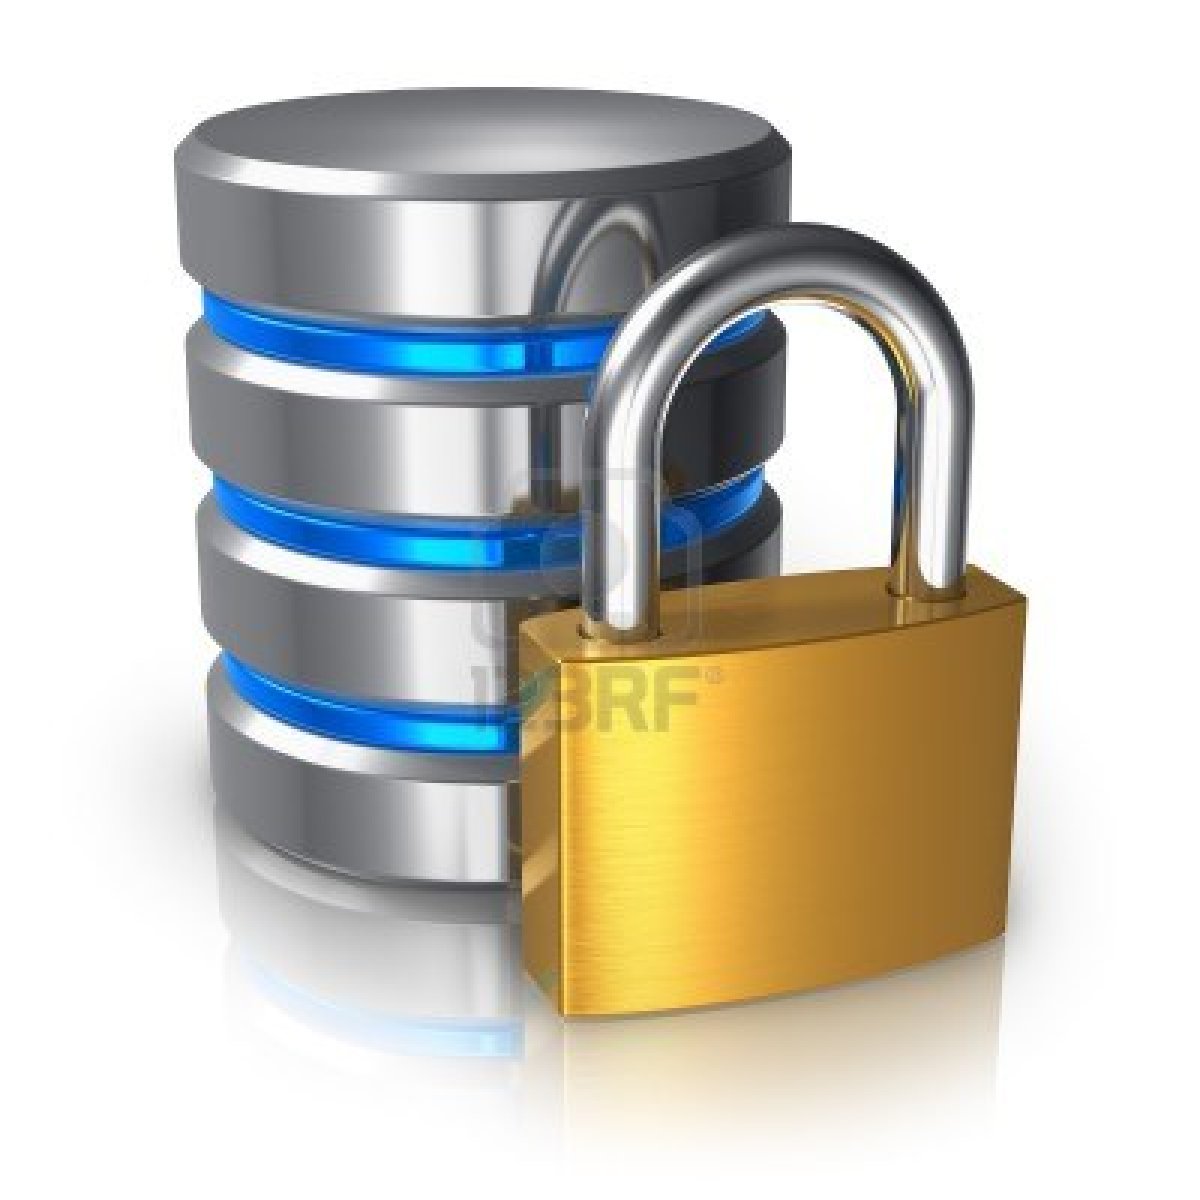 Database Security Icon